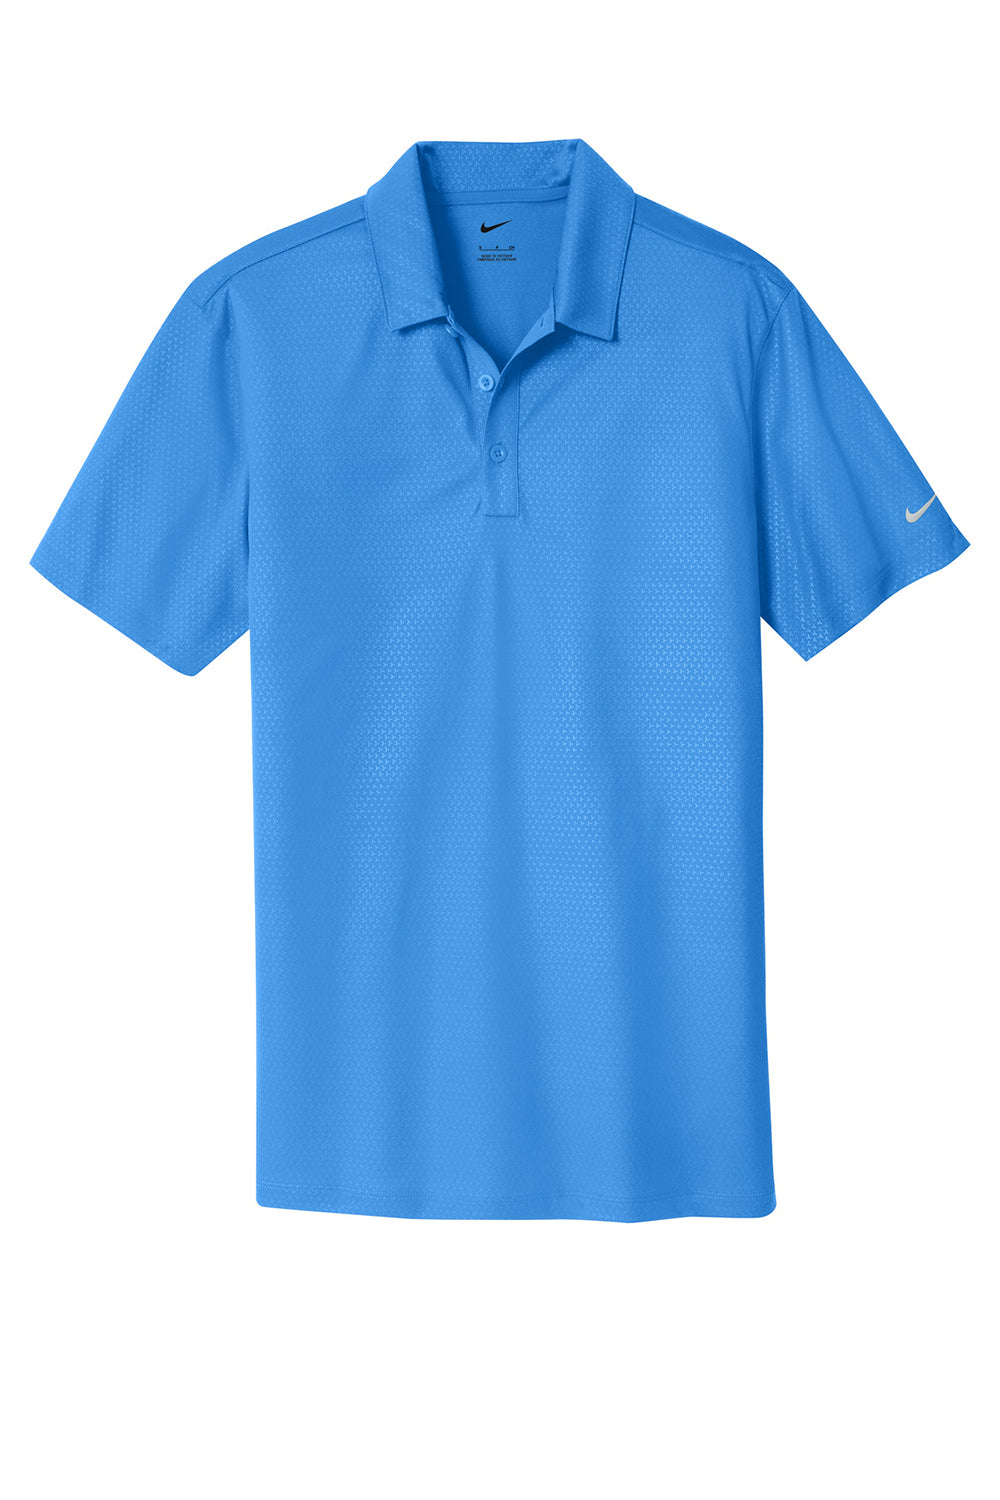 Nike 838964 Mens Dri-Fit Moisture Wicking Short Sleeve Polo Shirt Brisk Blue Flat Front